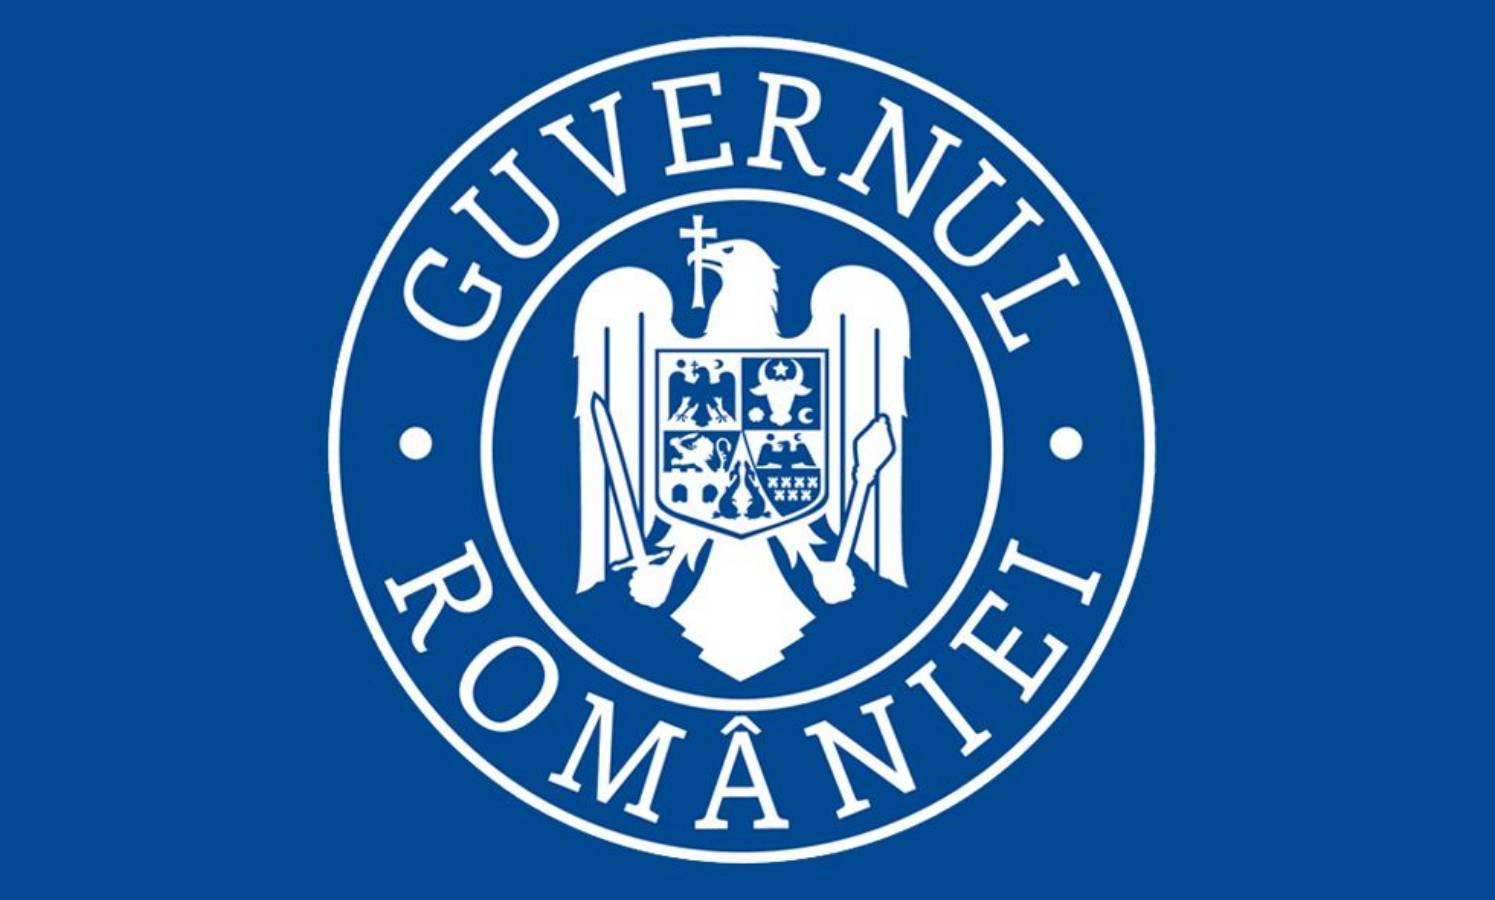 Guvernul Romaniei decizia starea alerta urgenta